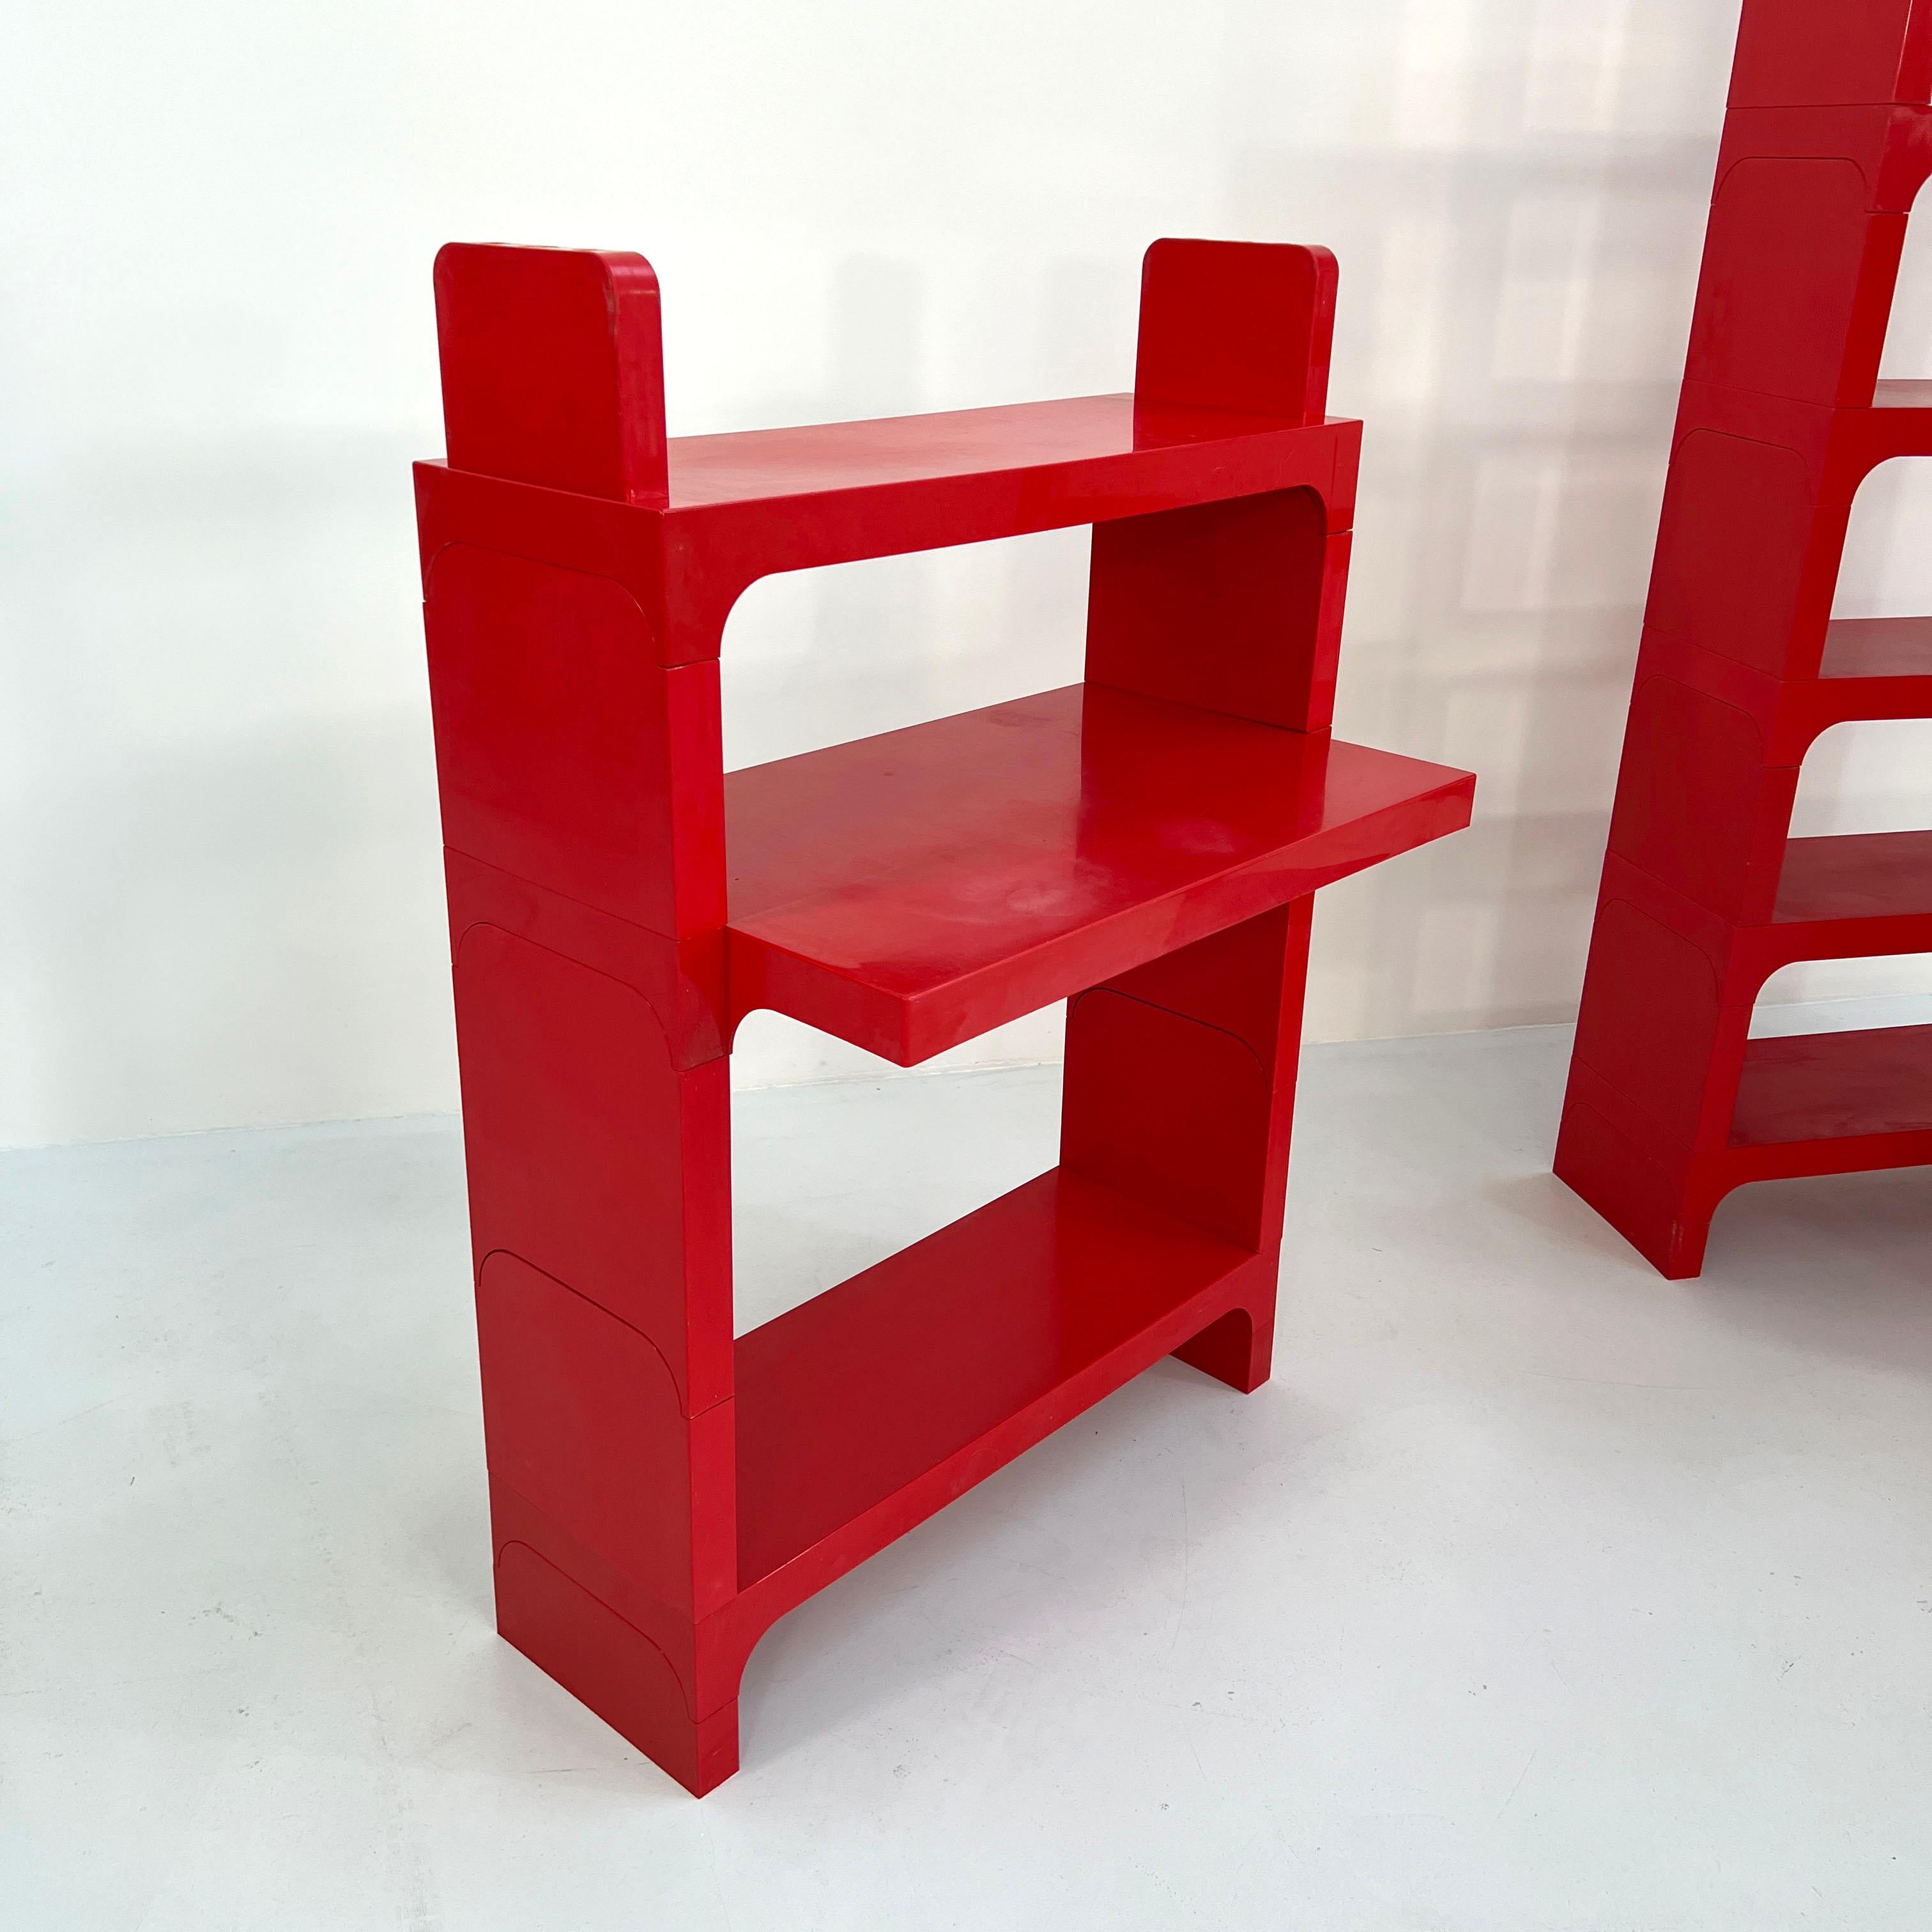 Post-Modern Red Modular Shelf with Desk by Olaf von Bohr for Kartell, 1970s